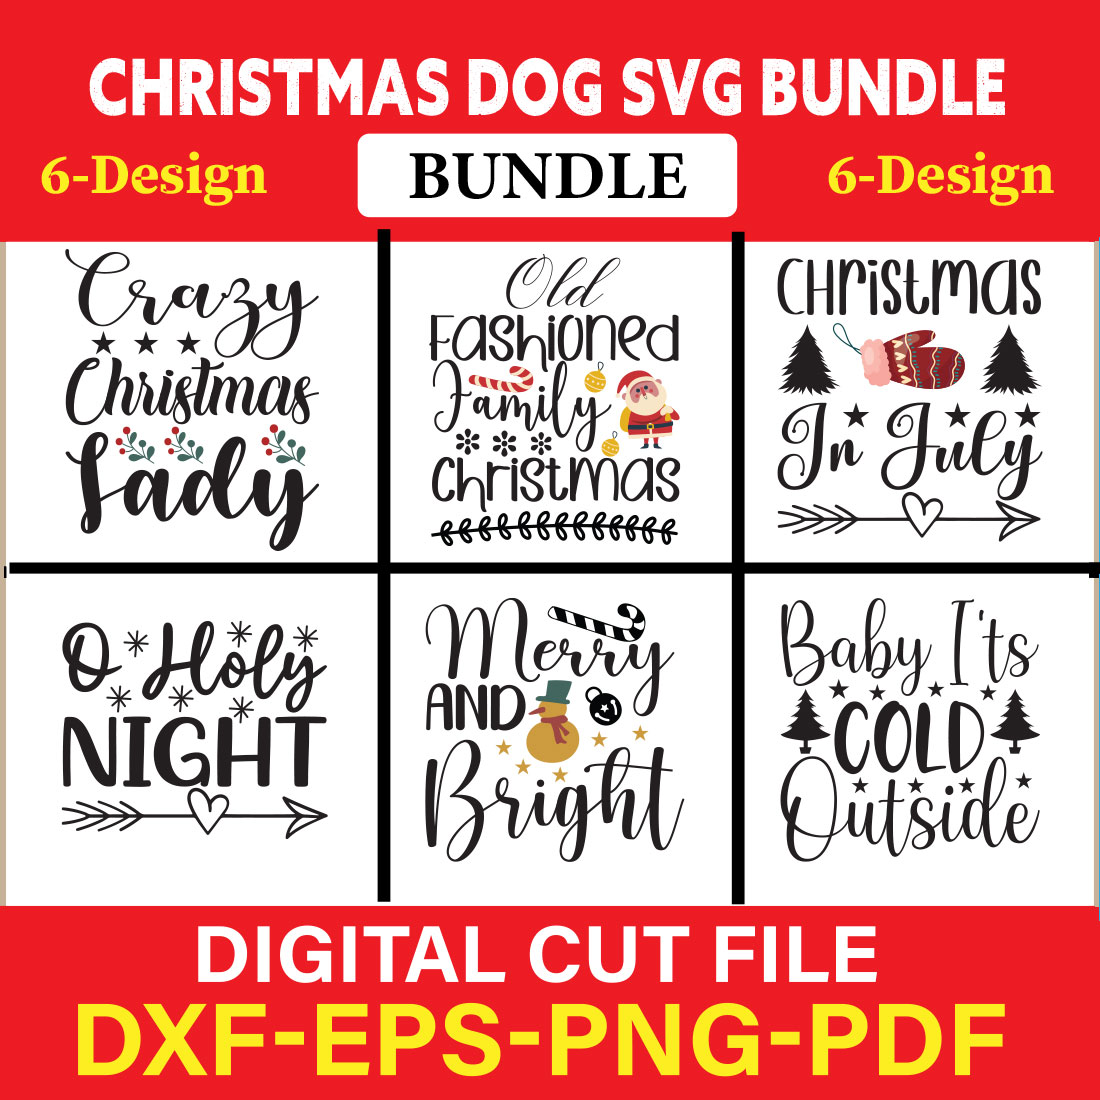 Christmas SVG Bundle / Funny Christmas SVG / Cut File vol-24 cover image.